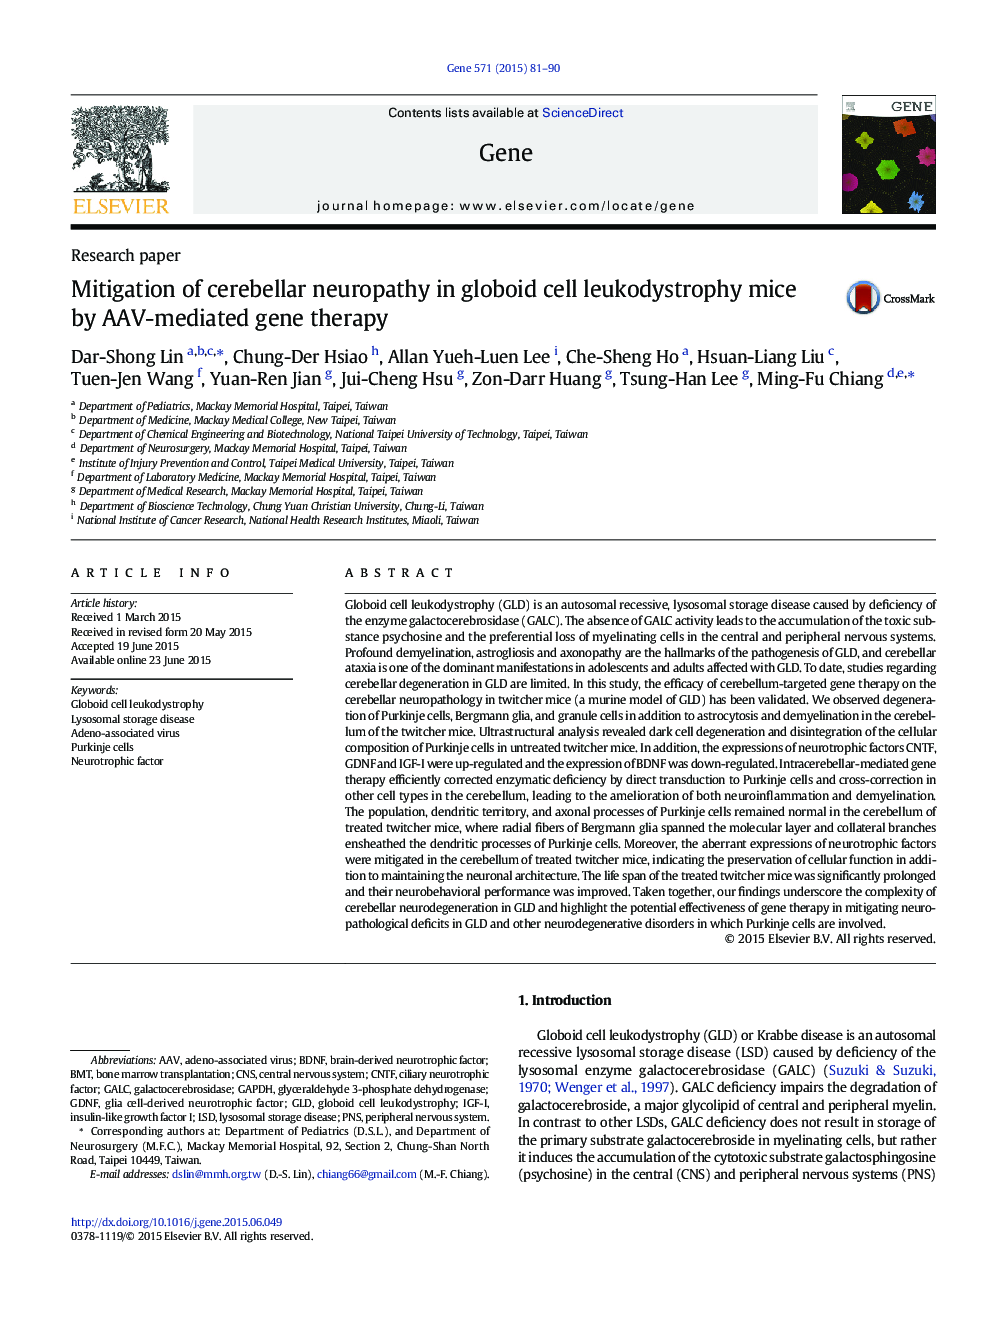 Mitigation of cerebellar neuropathy in globoid cell leukodystrophy mice by AAV-mediated gene therapy